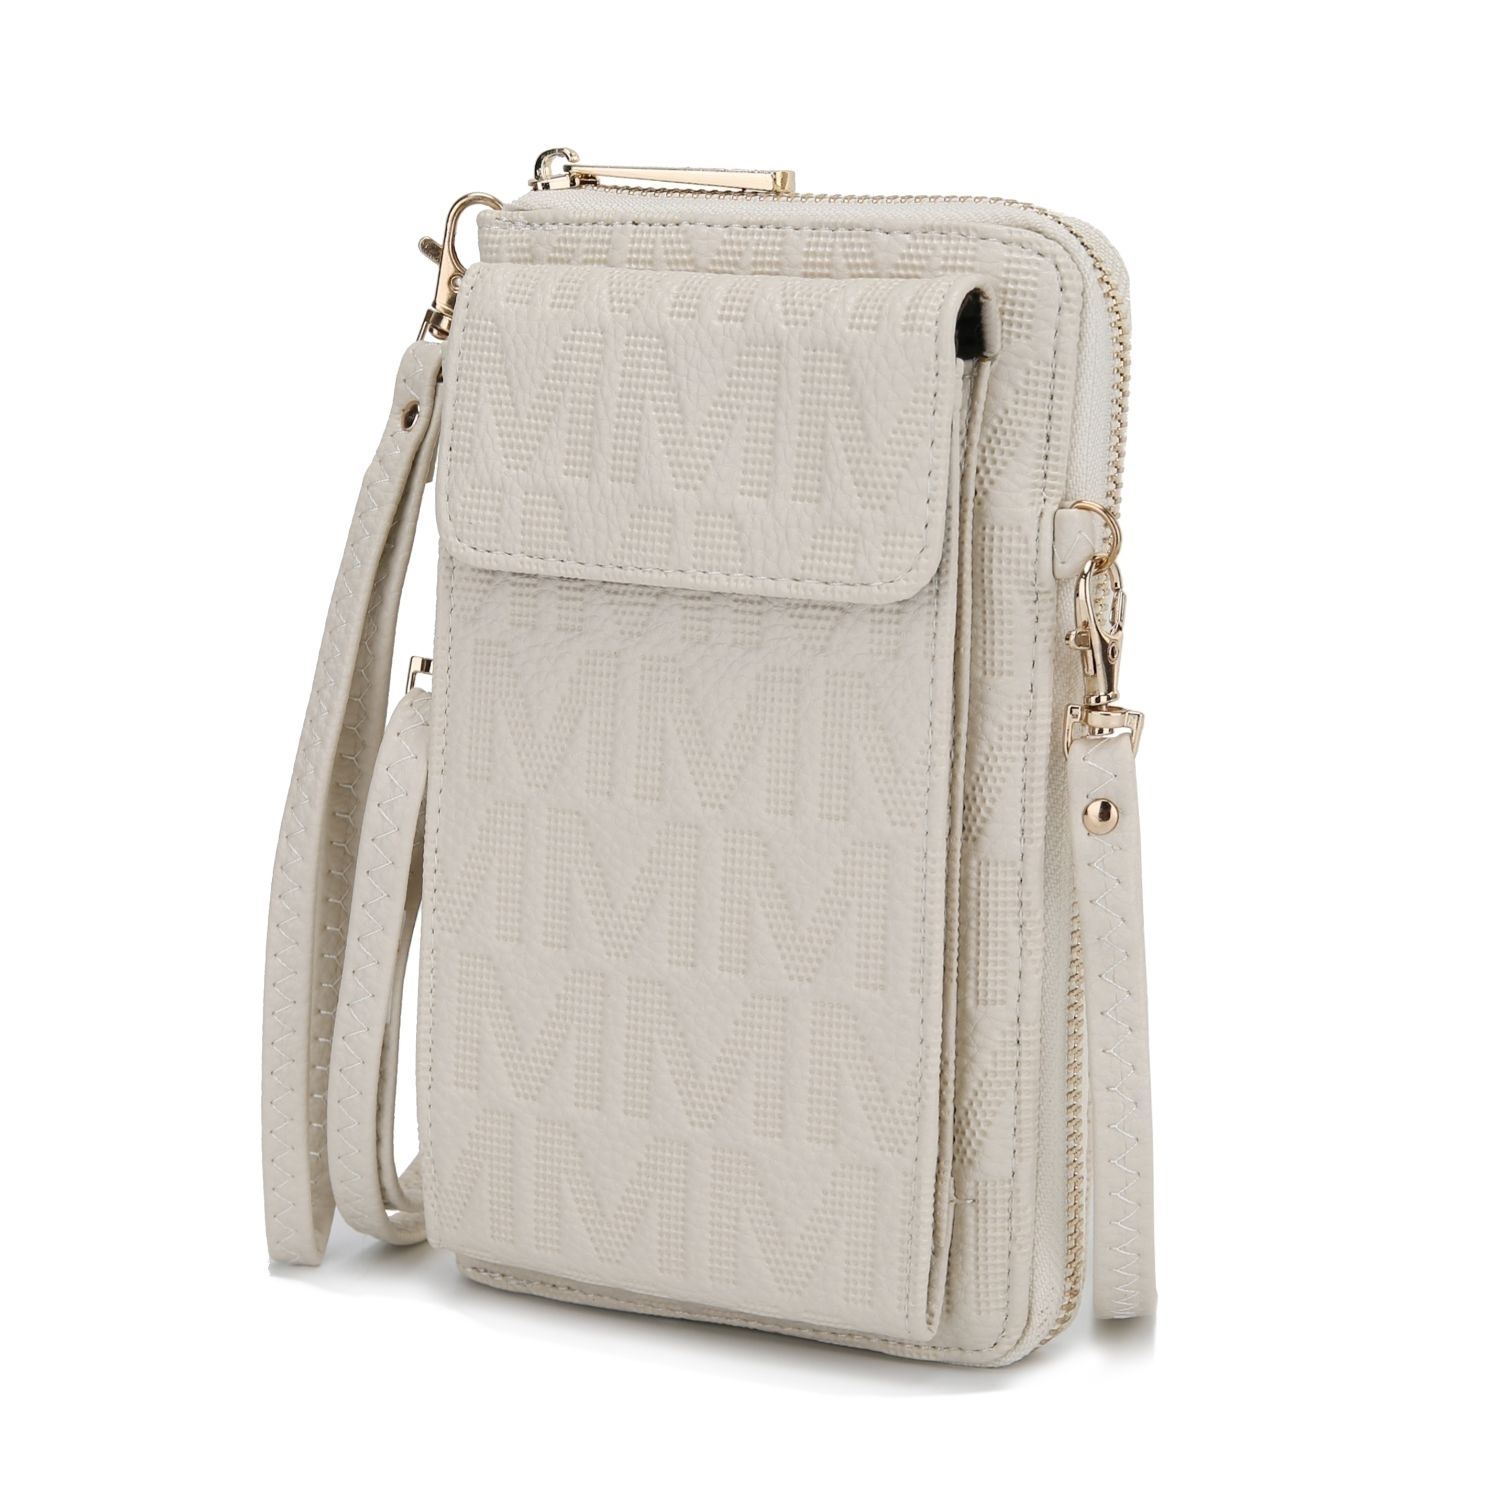 MKF Collection Caddy Phone Wallet Crossbody Handbag By Mia K - Tan